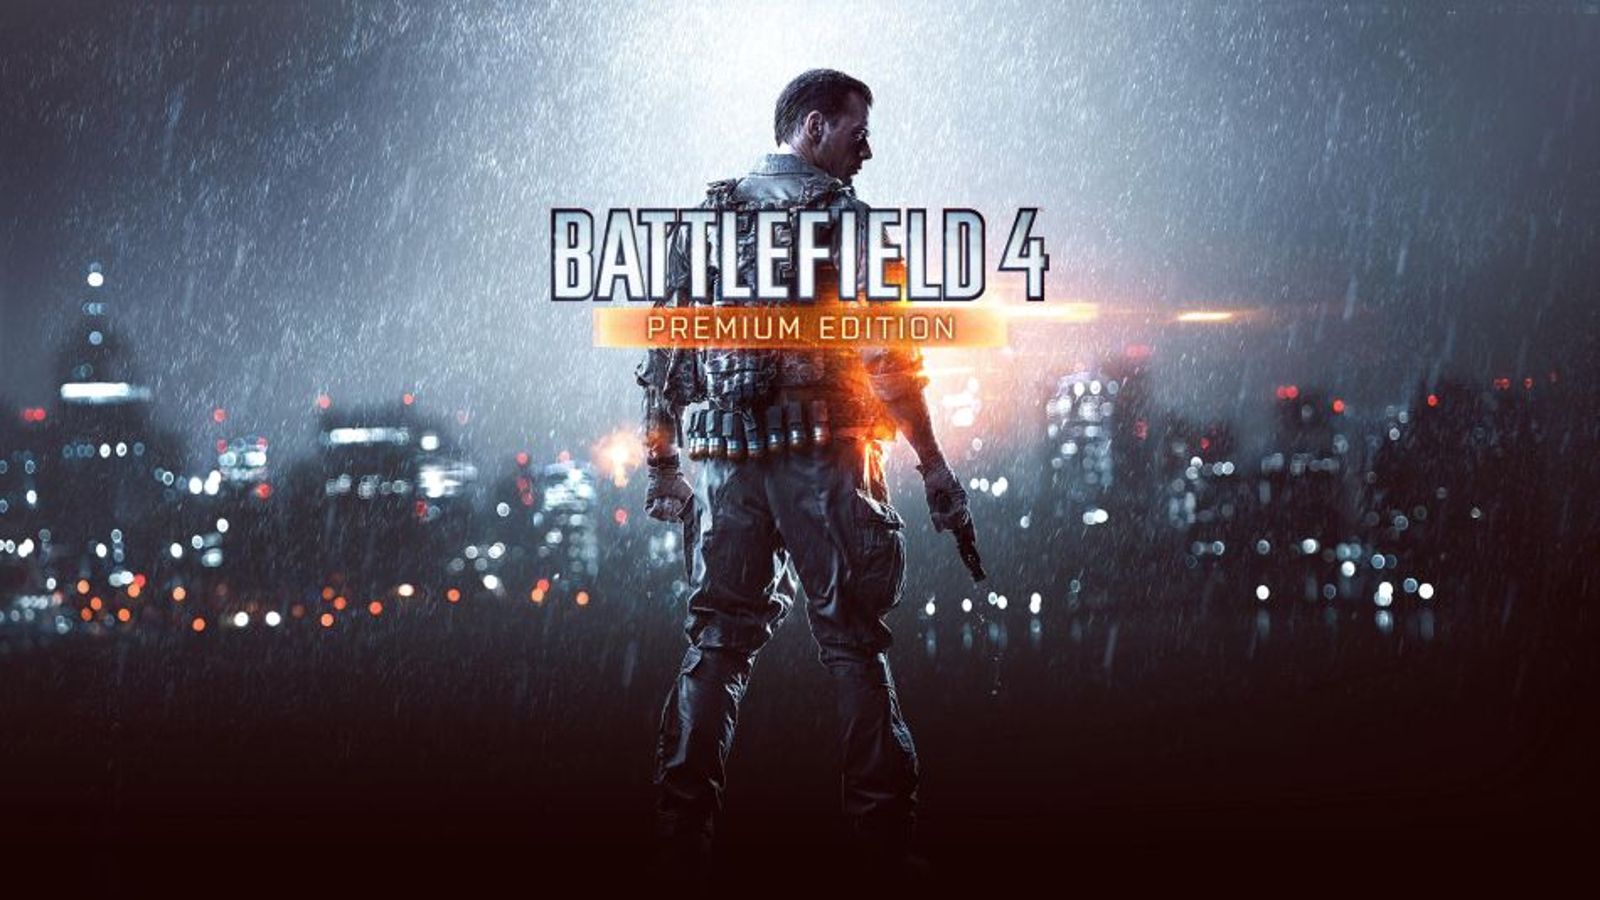 100+] 1920x1080 Battlefield 4 Backgrounds